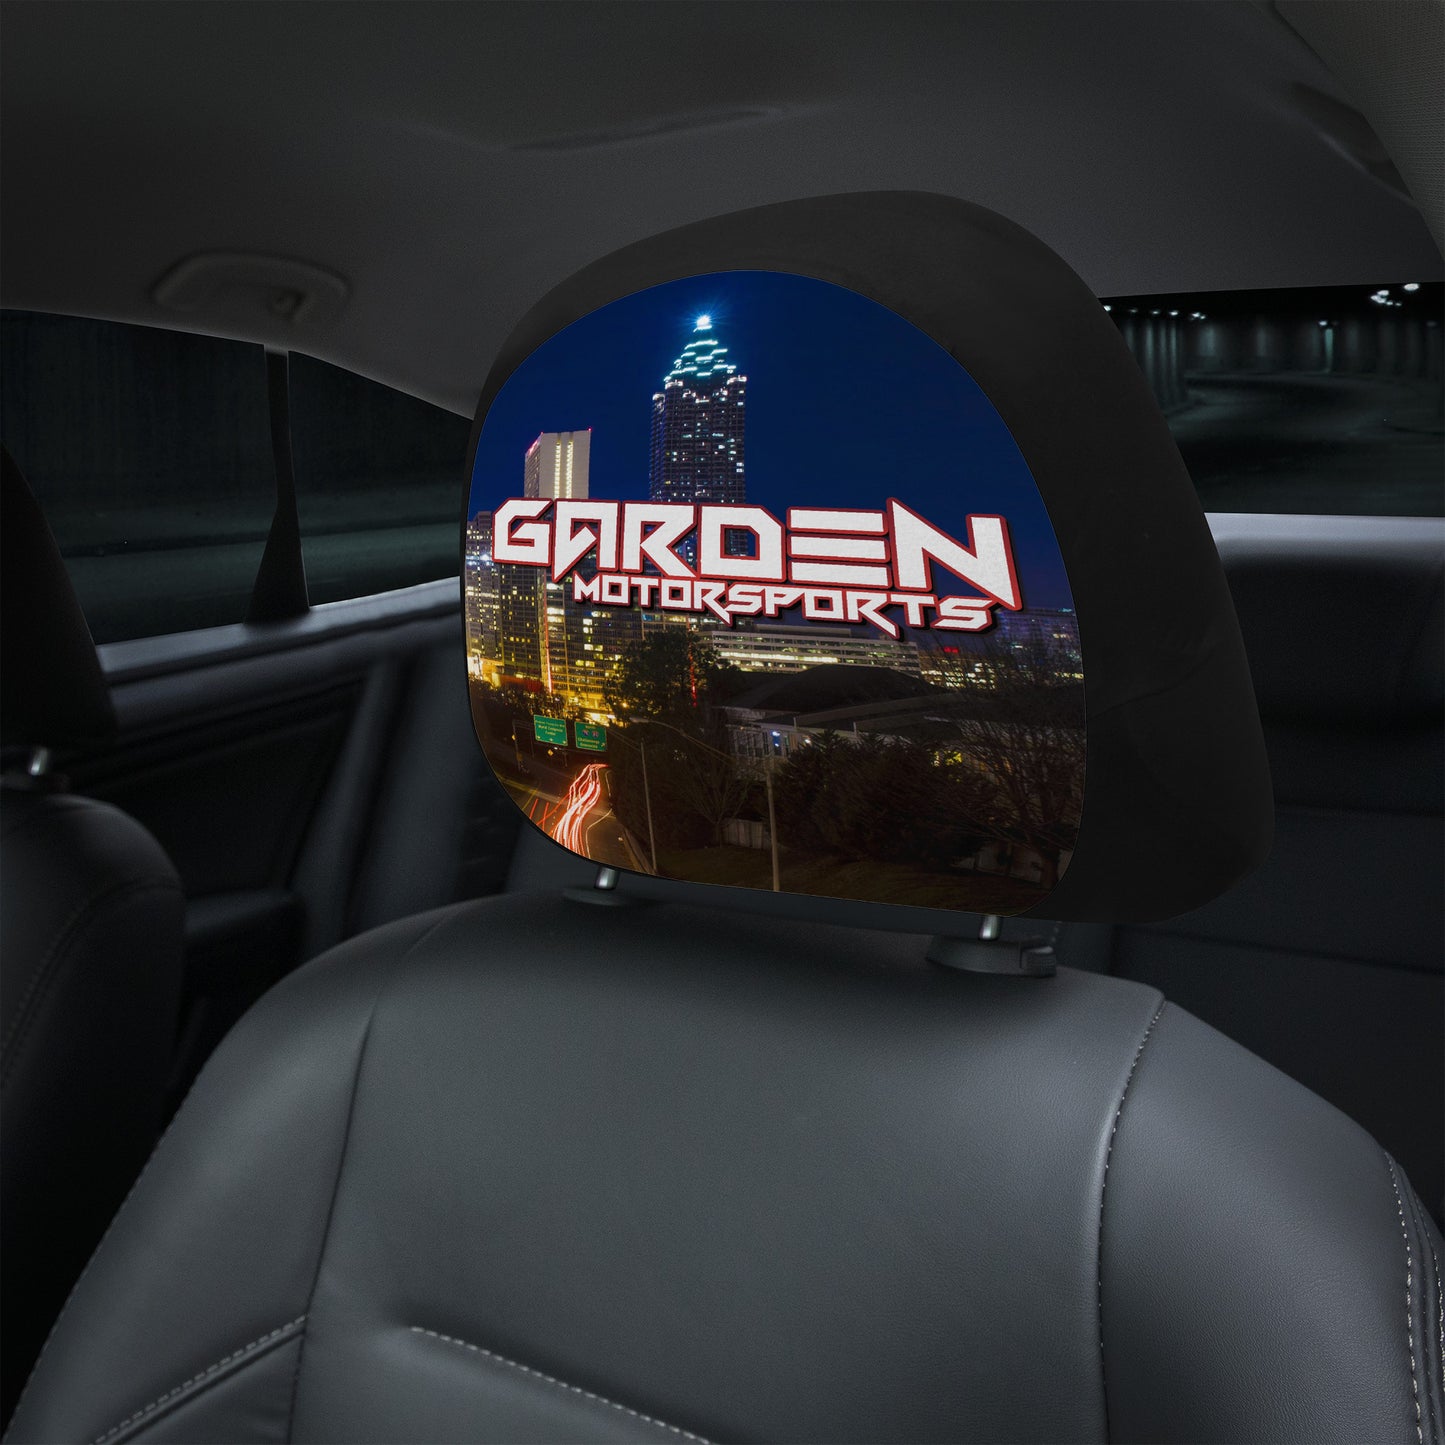 Garden motorsports Car Headrest Covers